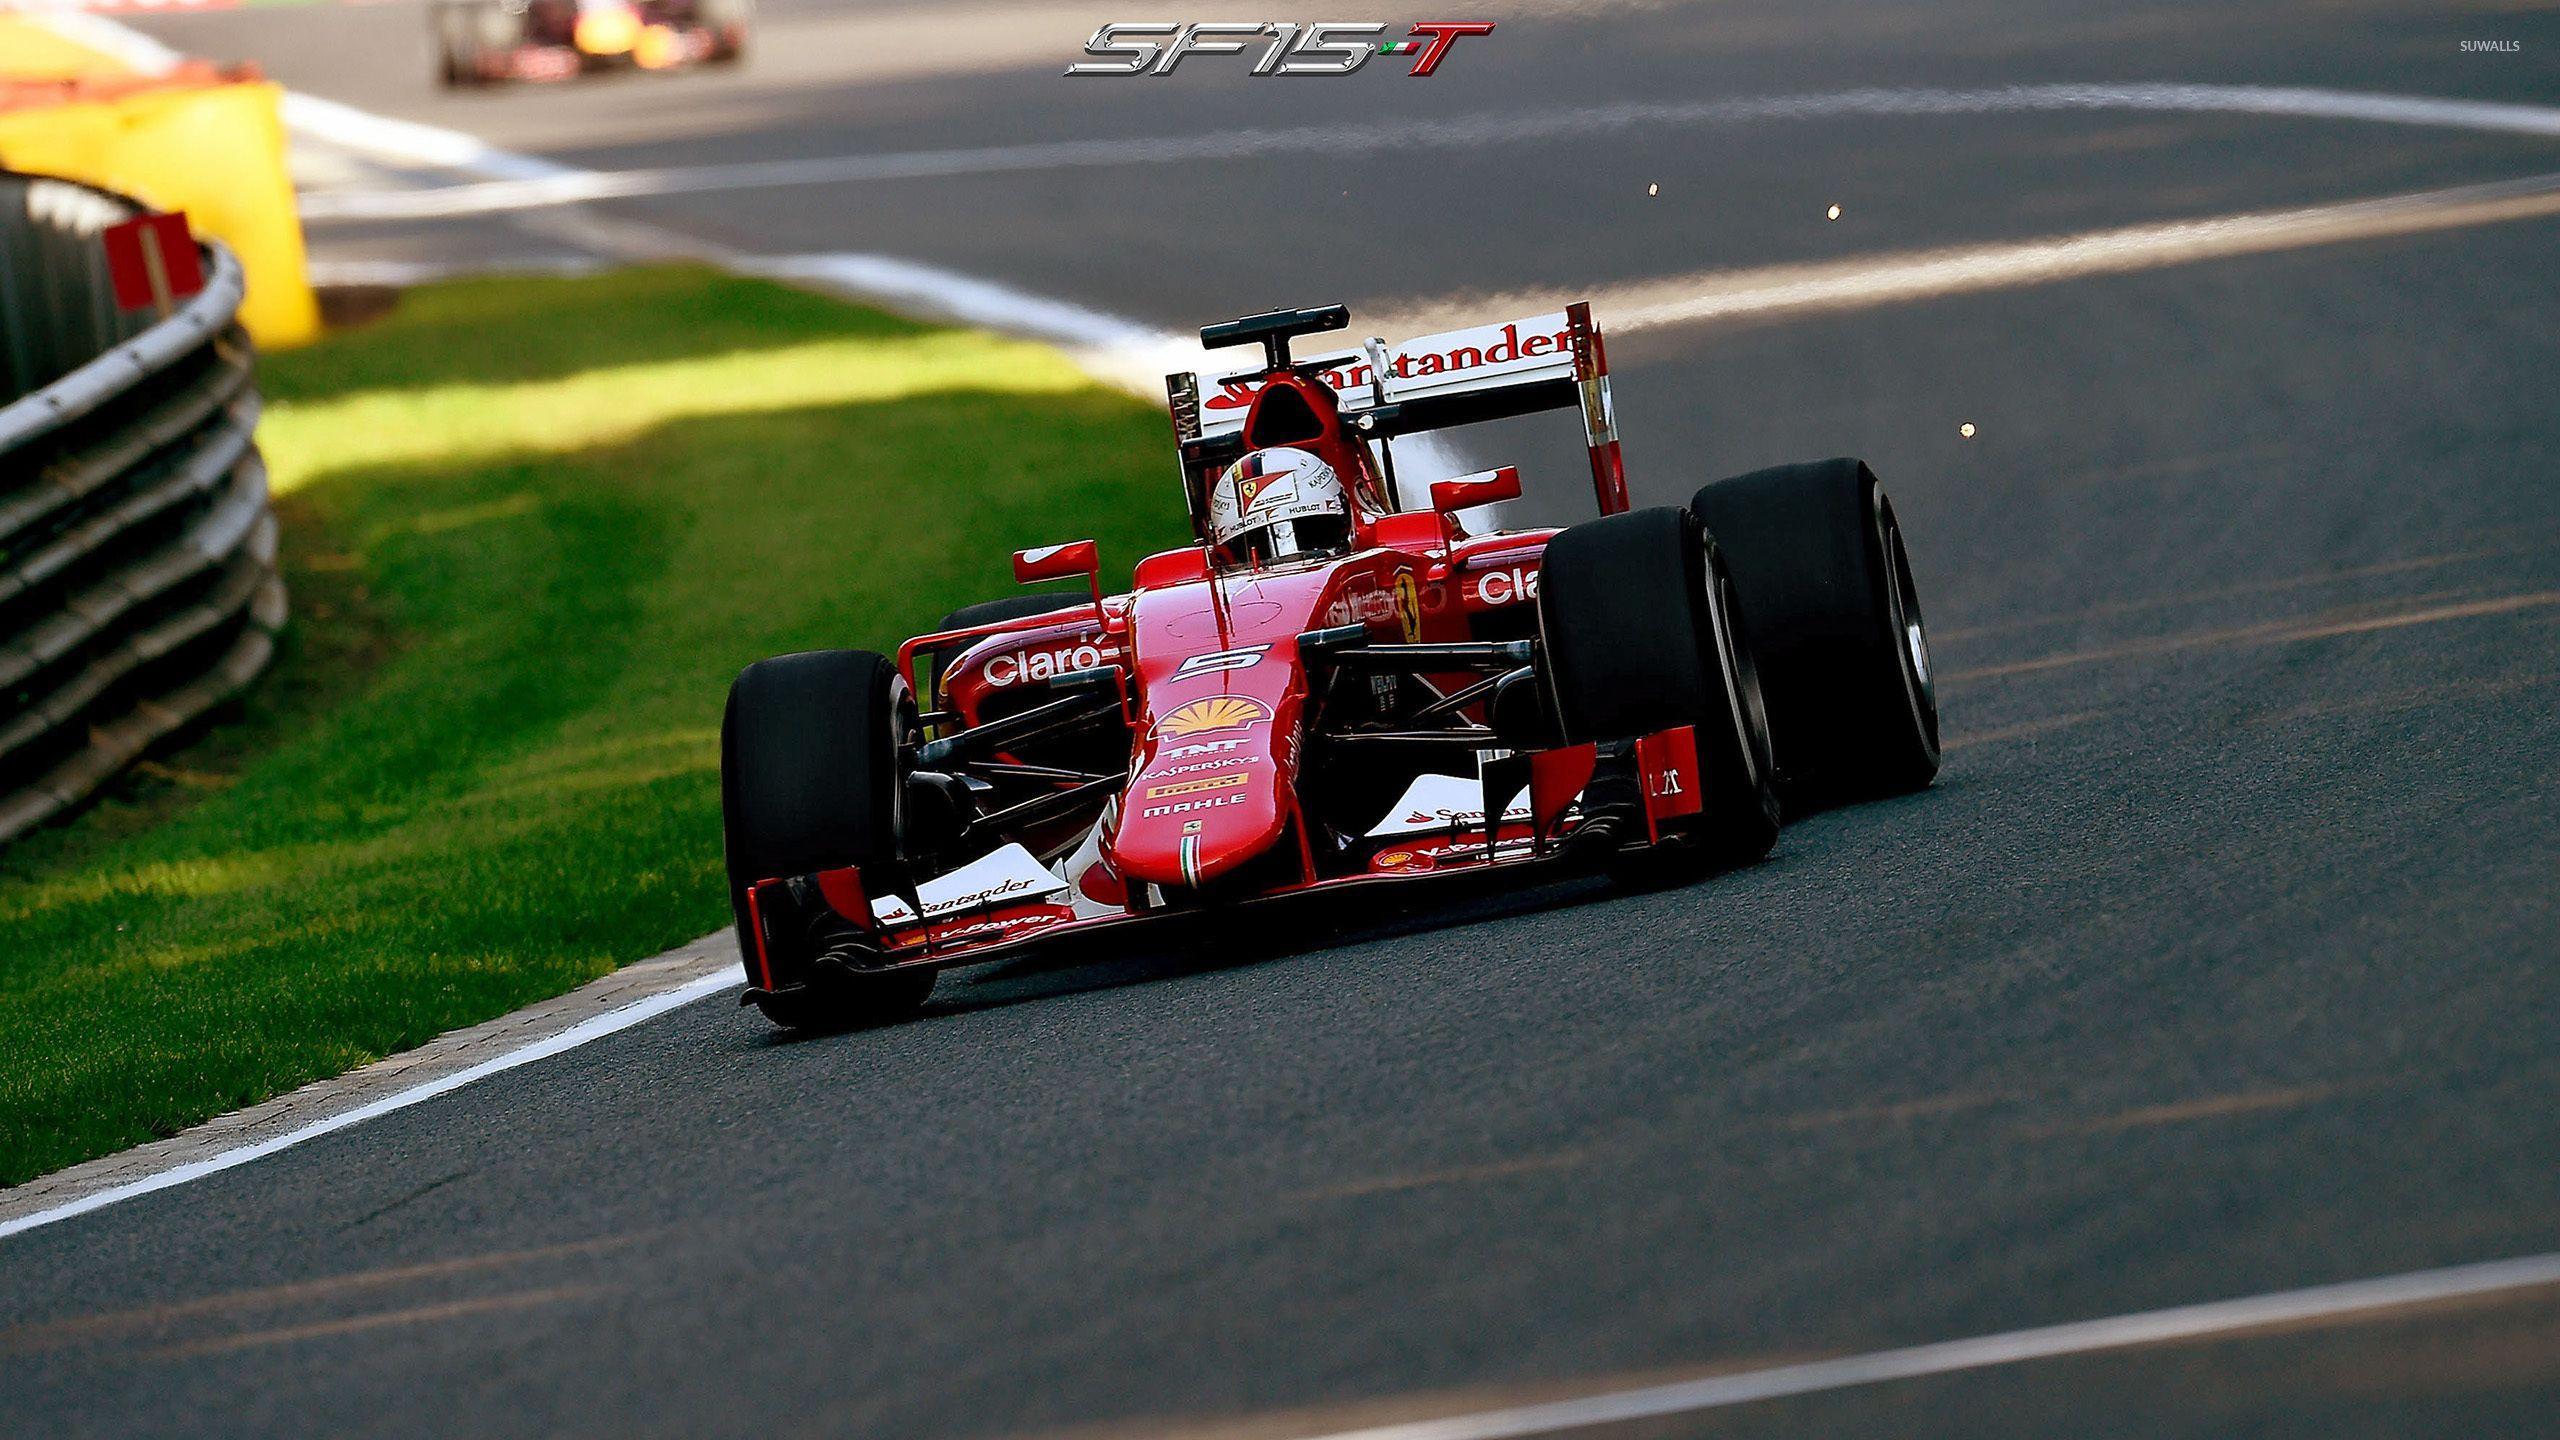 F1 Ferrari Desktop Wallpapers - Top Free F1 Ferrari ...